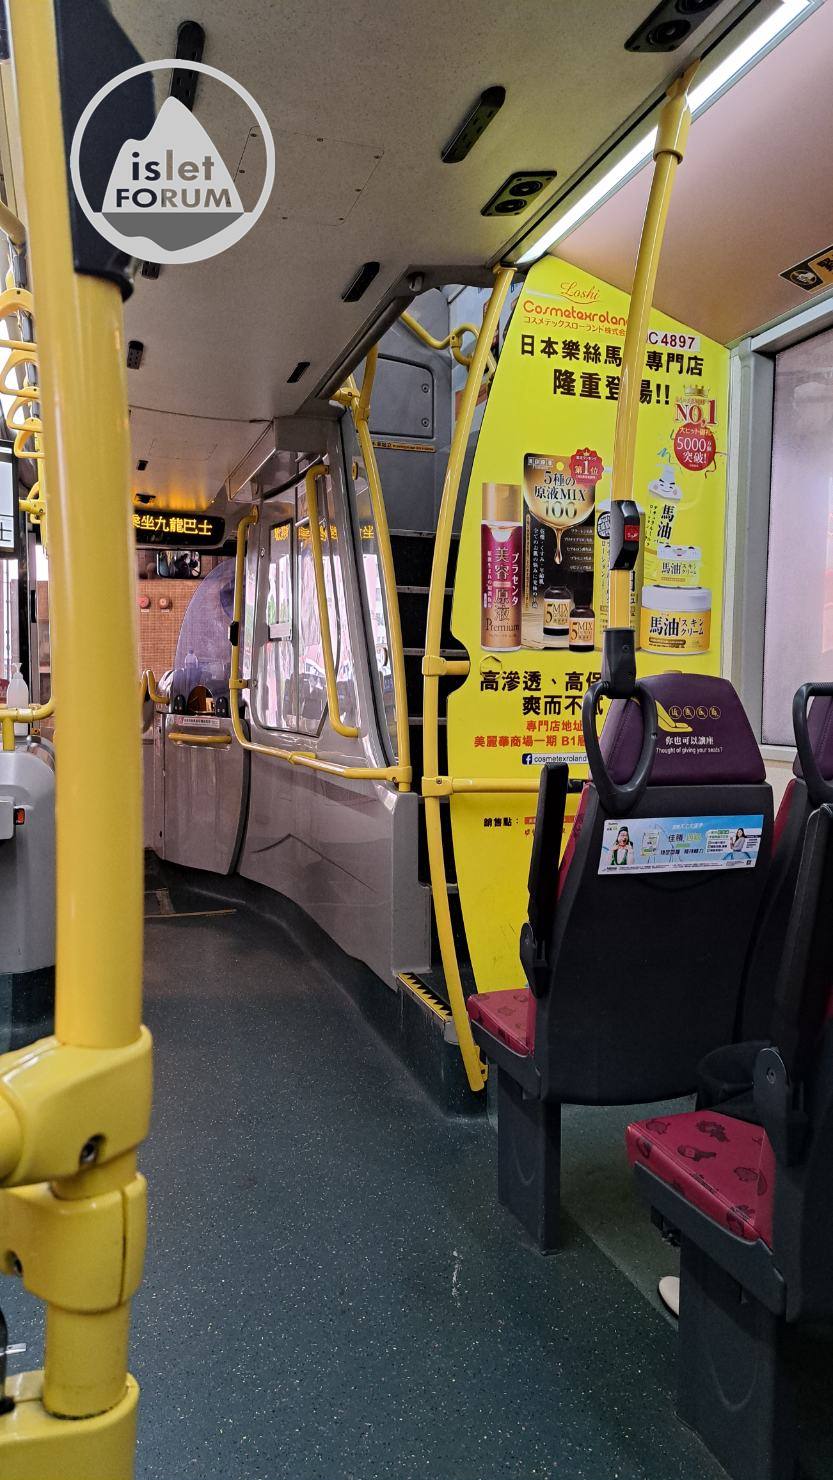 巴士上的廣告 ad on the bus (2).jpg